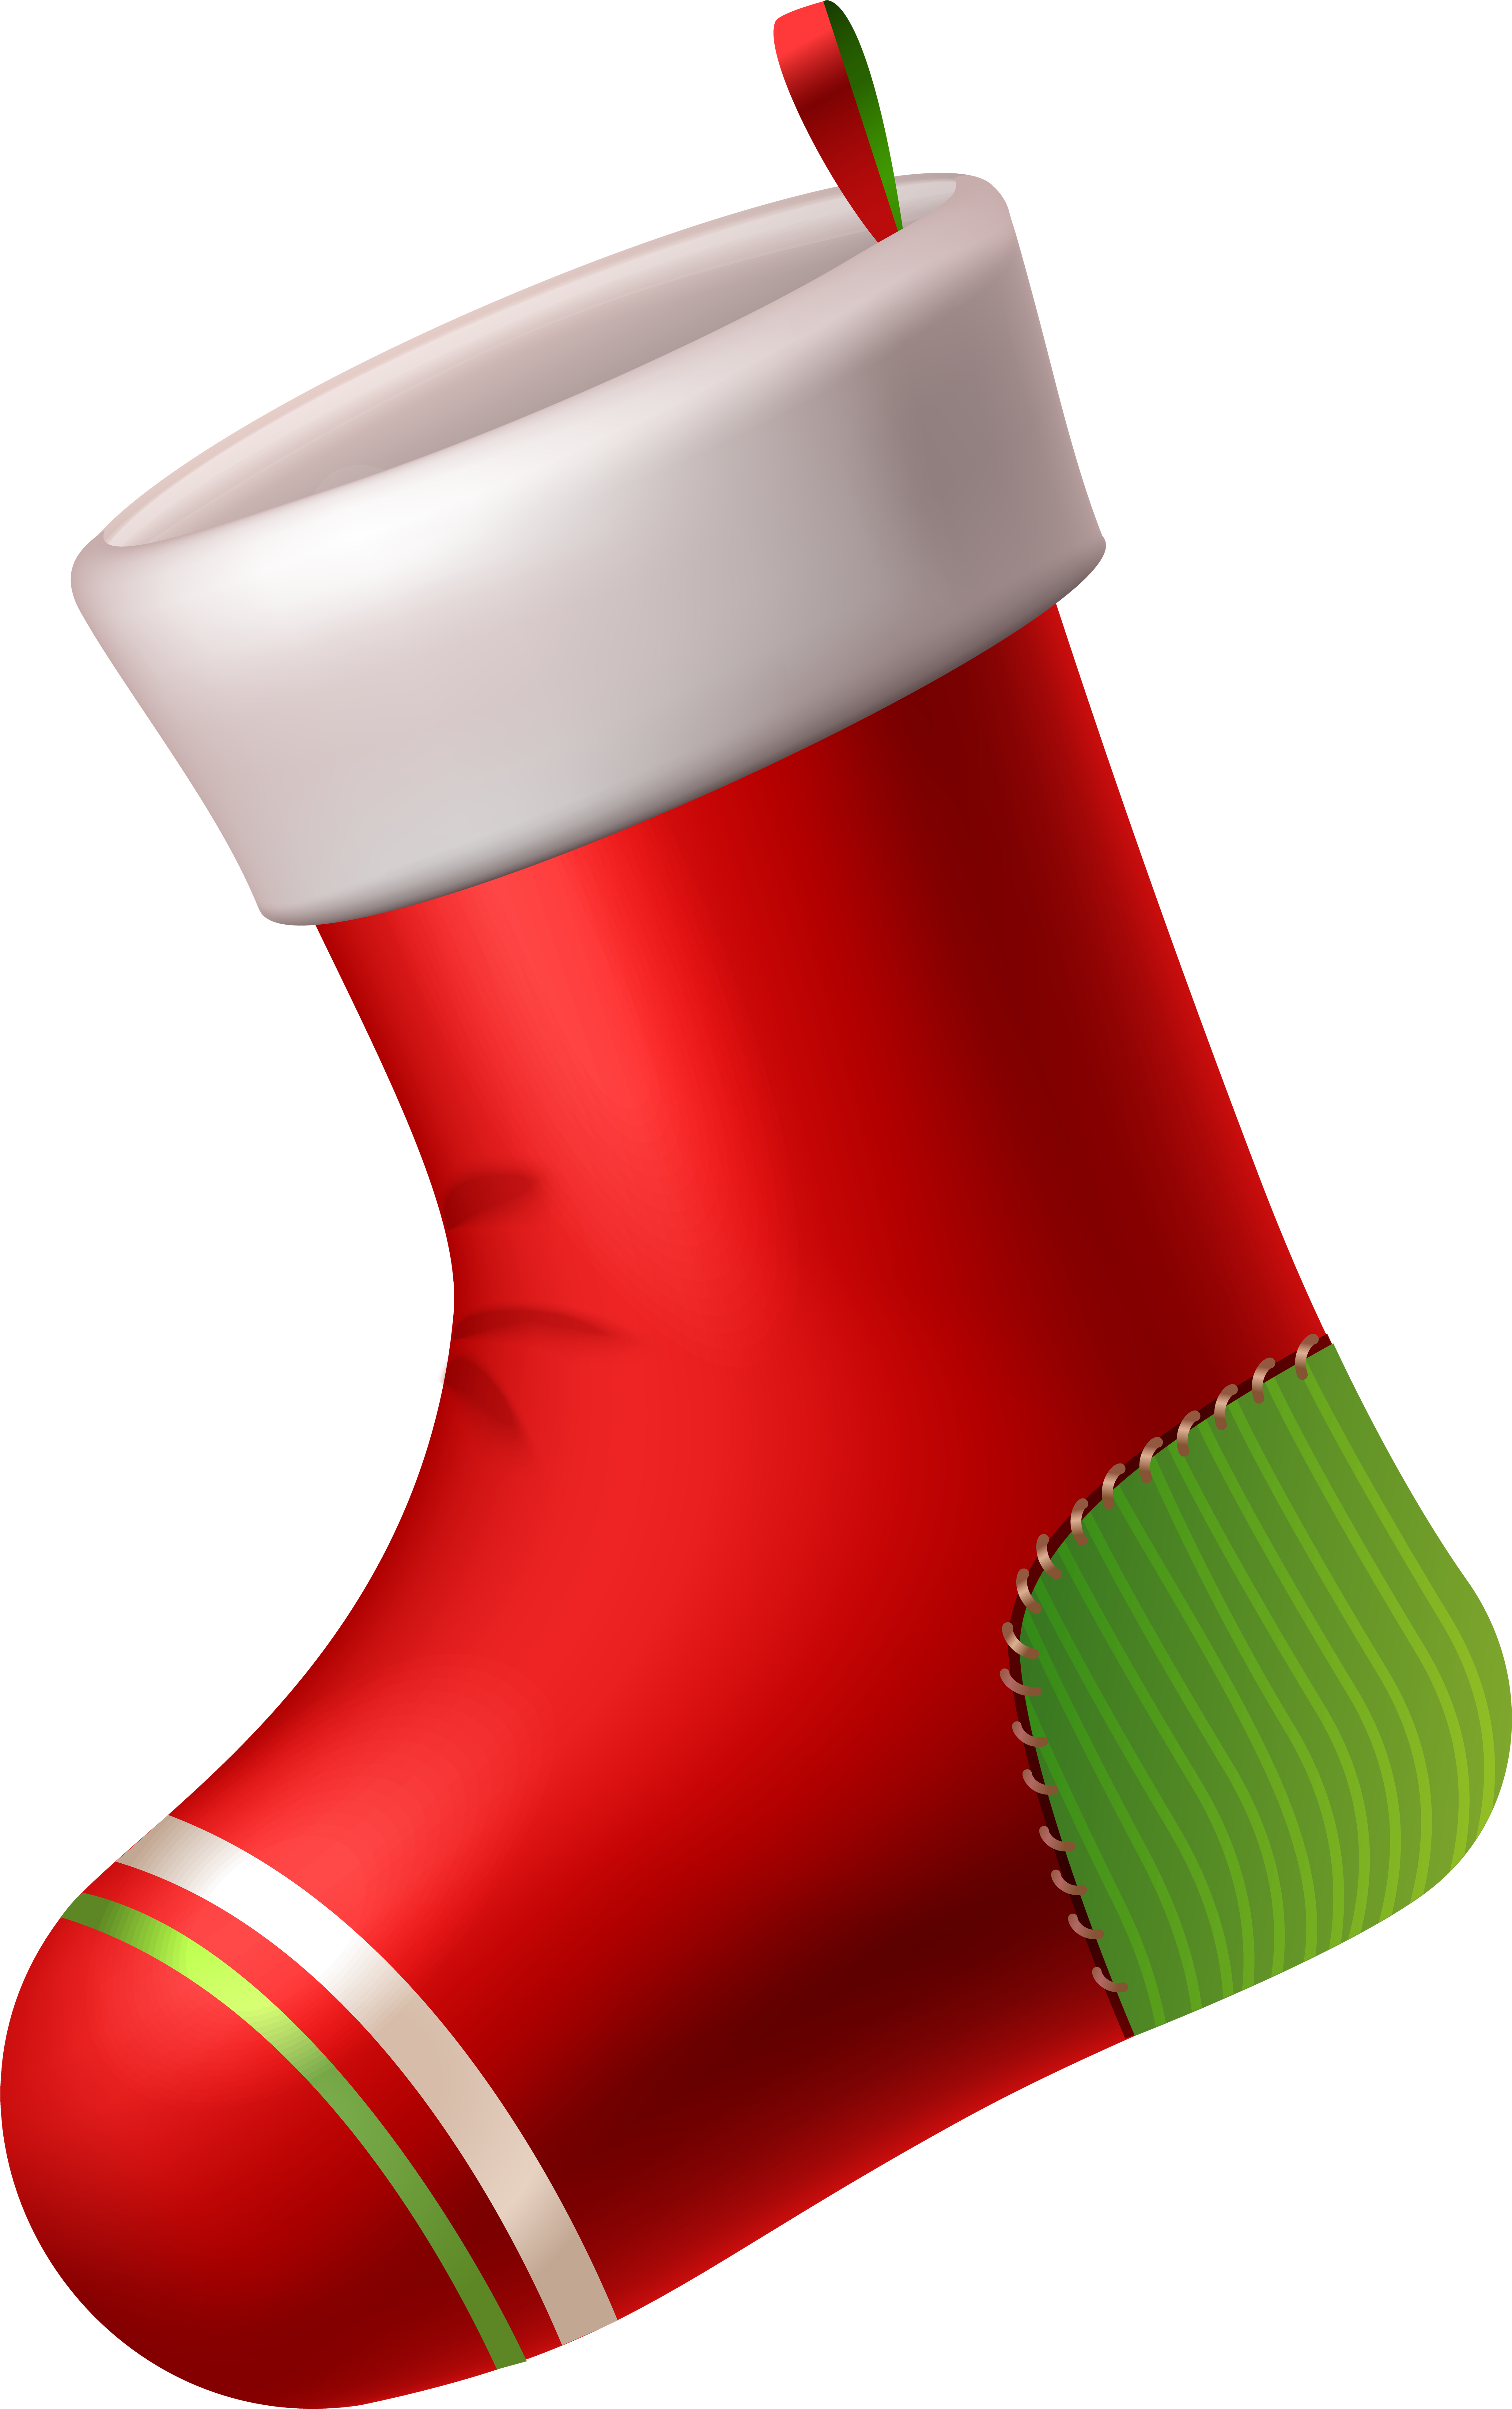 Santa Claus Christmas Stocking Candy Cane Clip Art - Santa Claus Christmas Stocking Candy Cane Clip Art (5021x8000)